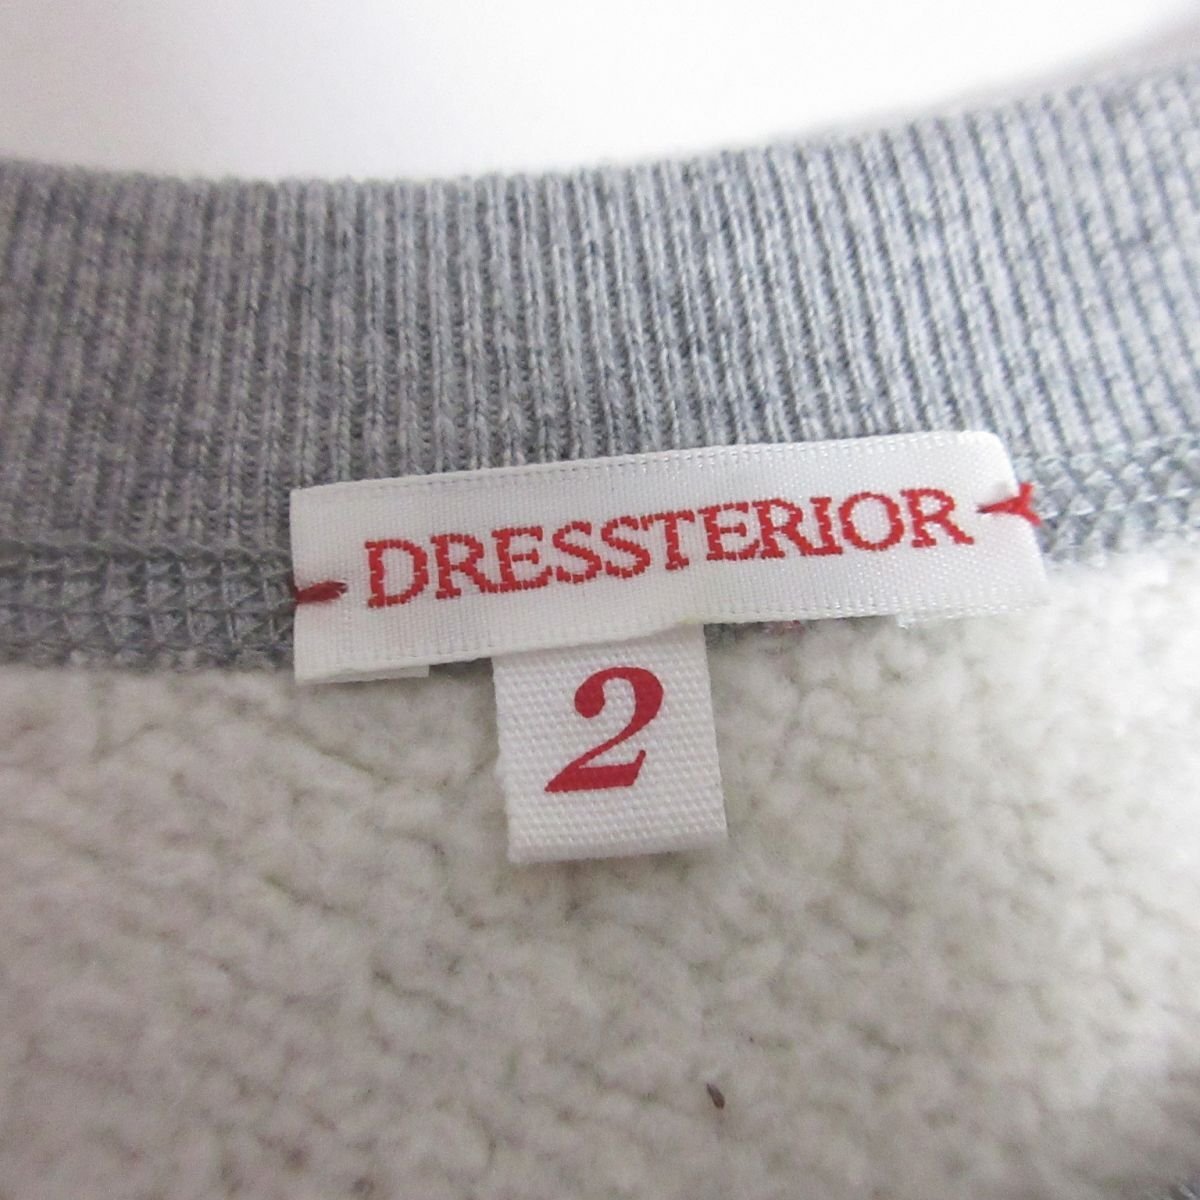  beautiful goods DRESSTERIOR Dress Terior standard hanging weight reverse side wool pull over crew neck long sleeve sweatshirt sweatshirt 085-16302 2 gray *